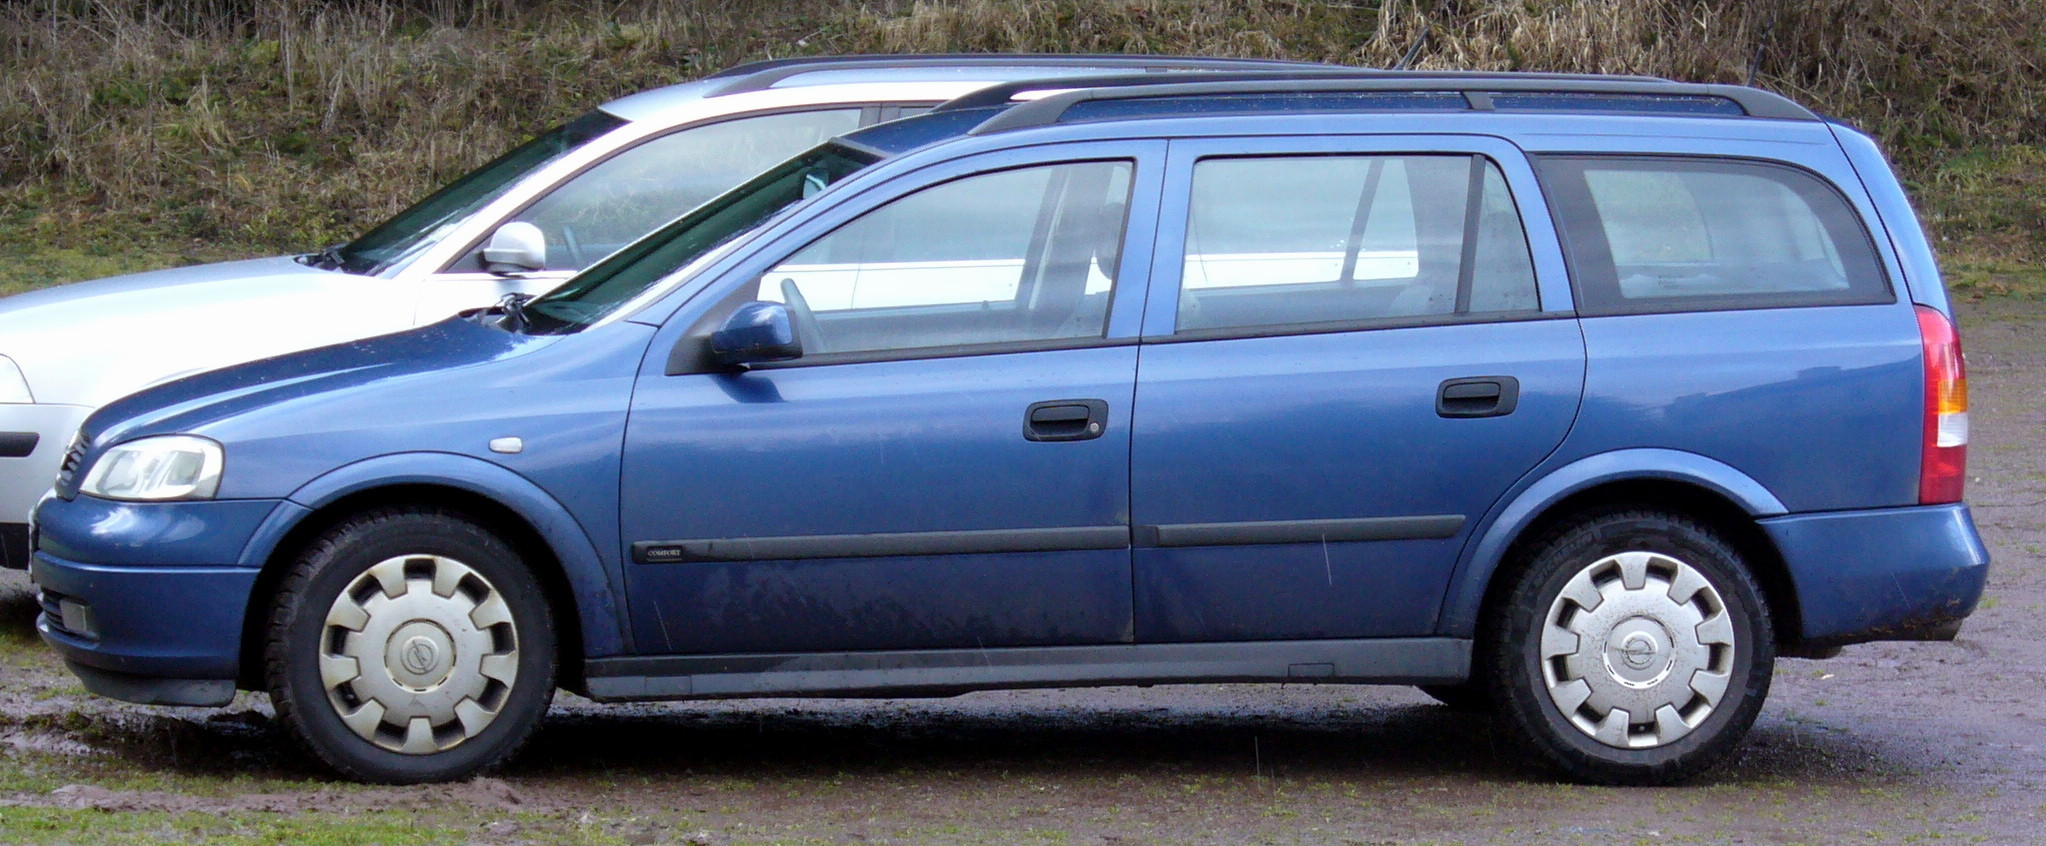 File:Opel Astra Caravan G.jpg - Wikimedia Commons